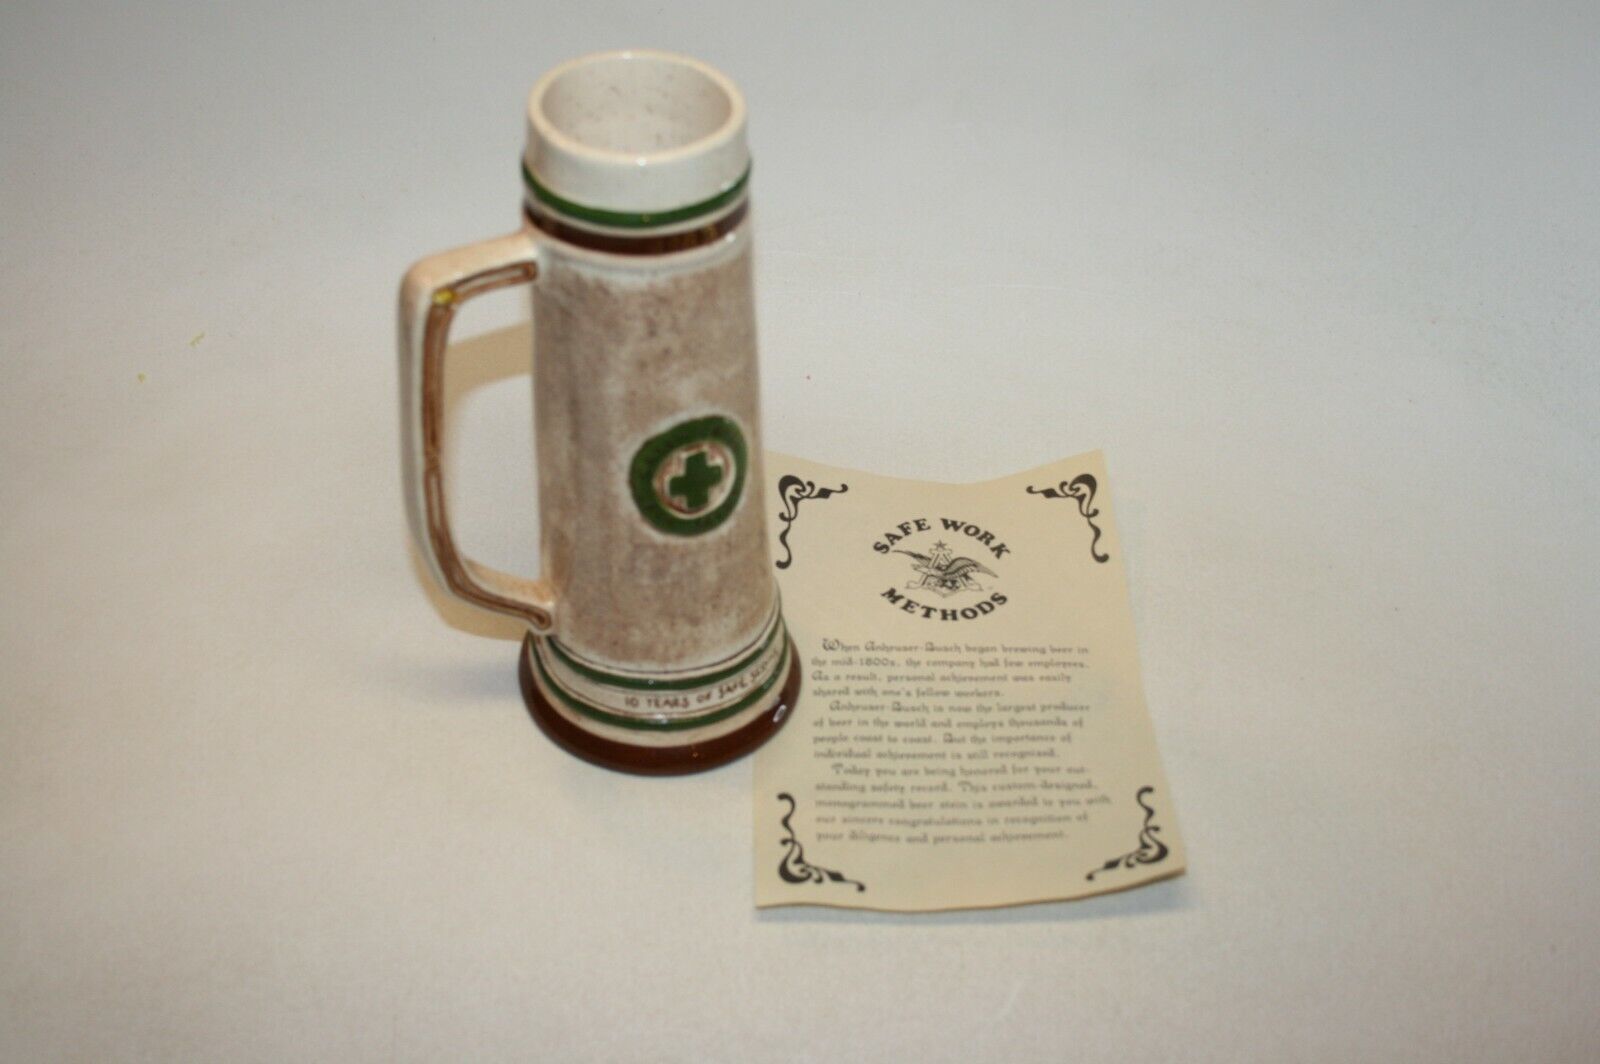 RARE 9" Anheuser Busch 10 Year Green Cross Safety Award Beer Stein 1988 Vintage - $178.19